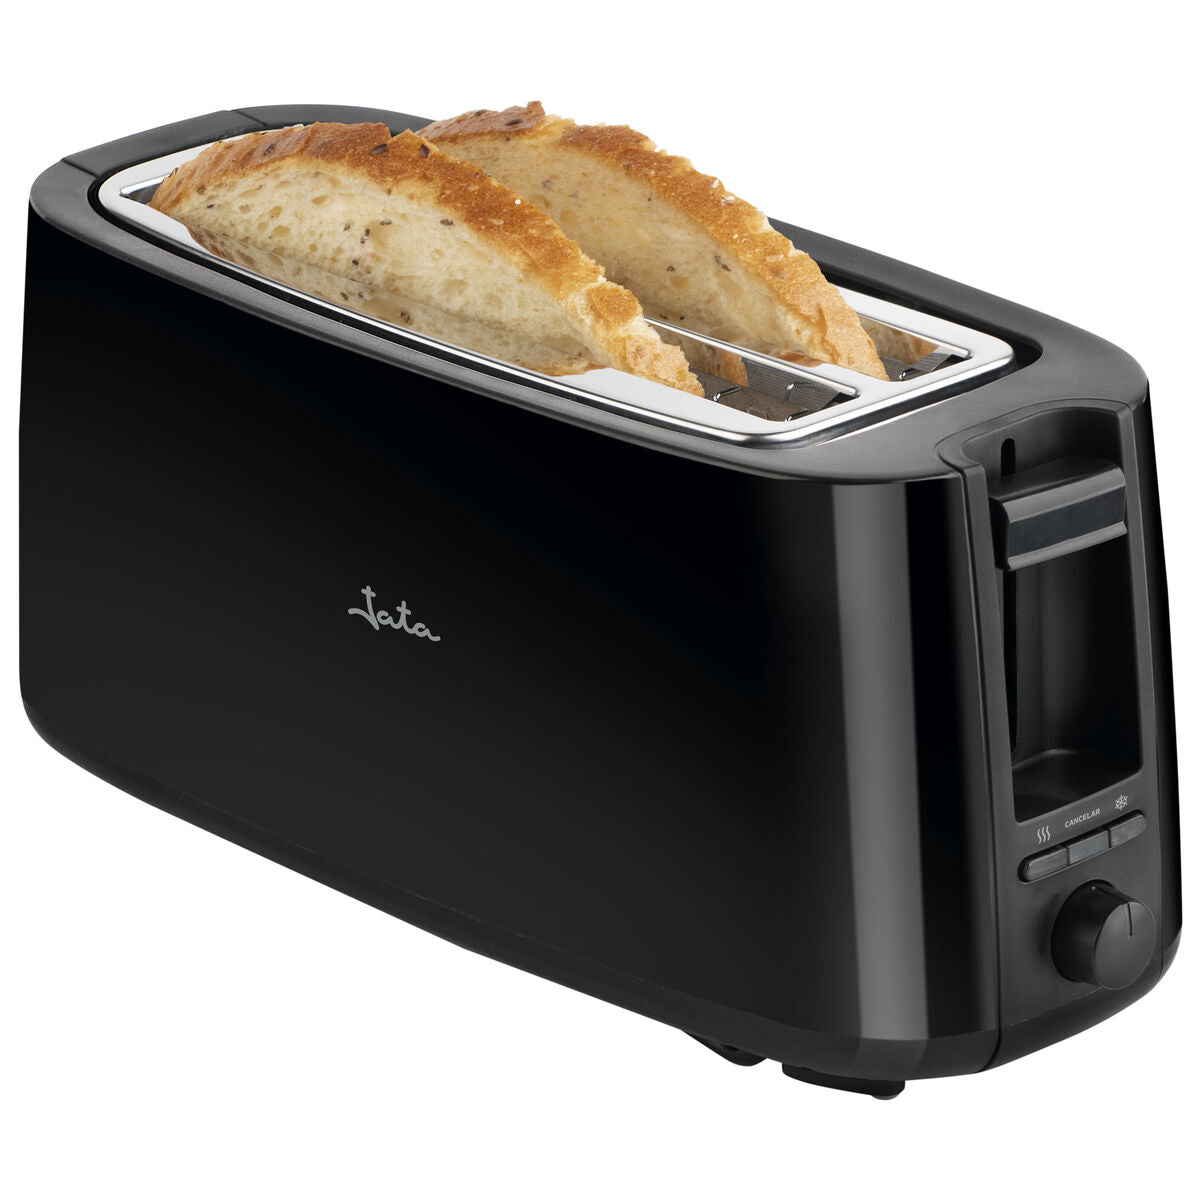 Toaster JATA 1400 W - CA International 